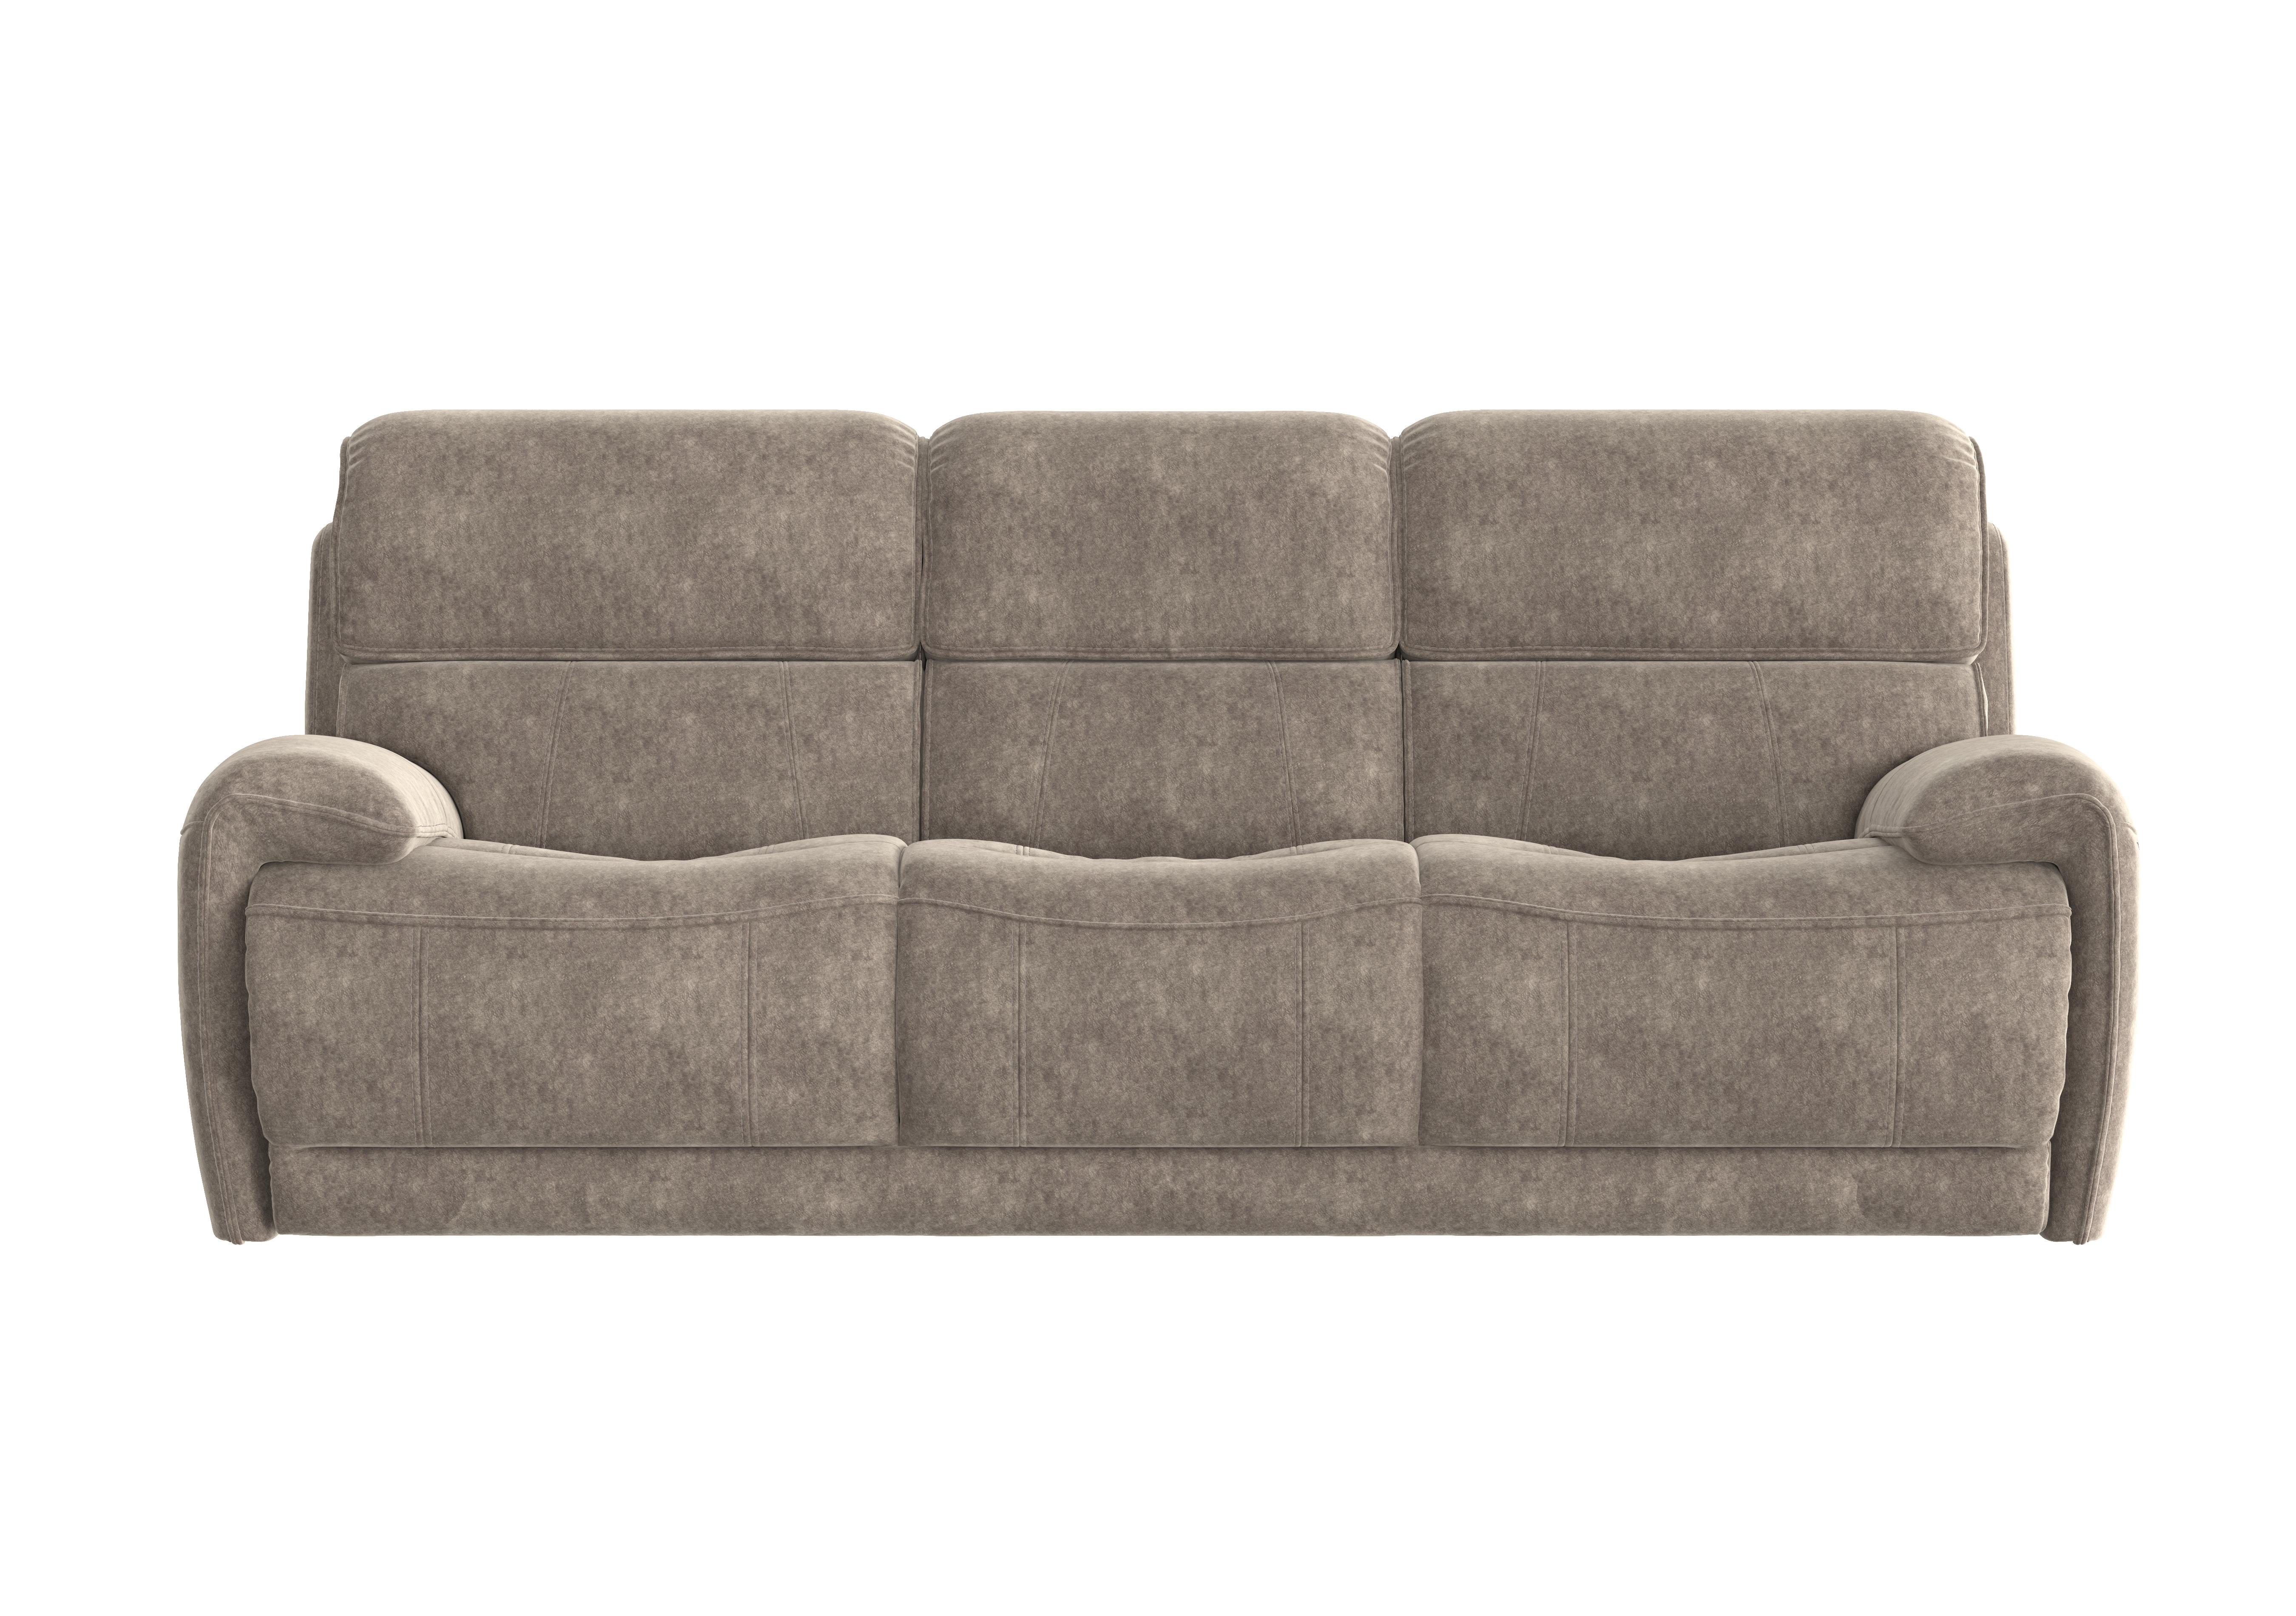 Link 3 Seater Fabric Sofa in Bfa-Bnn-R29 Fv1 Mink on Furniture Village